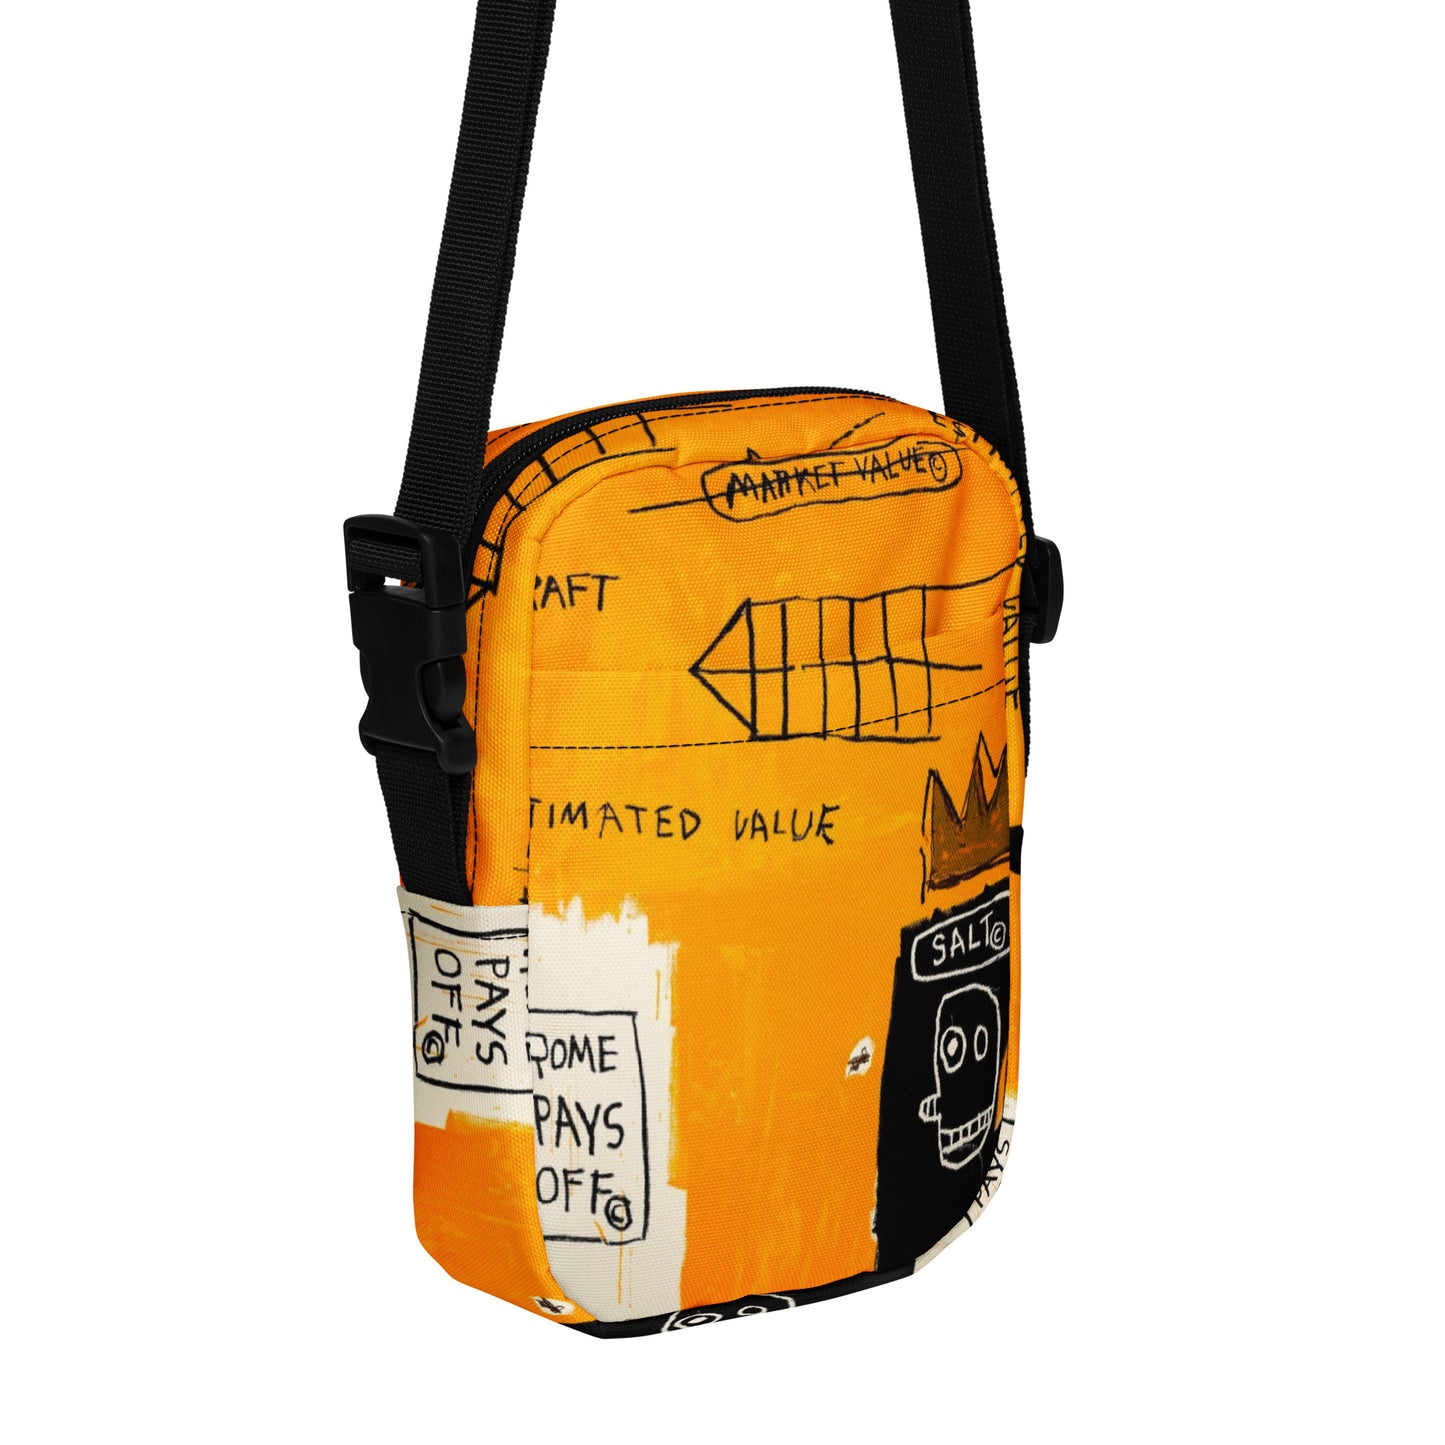 Jean-Michel Basquiat "Rome Pays Off" Artwork Bag